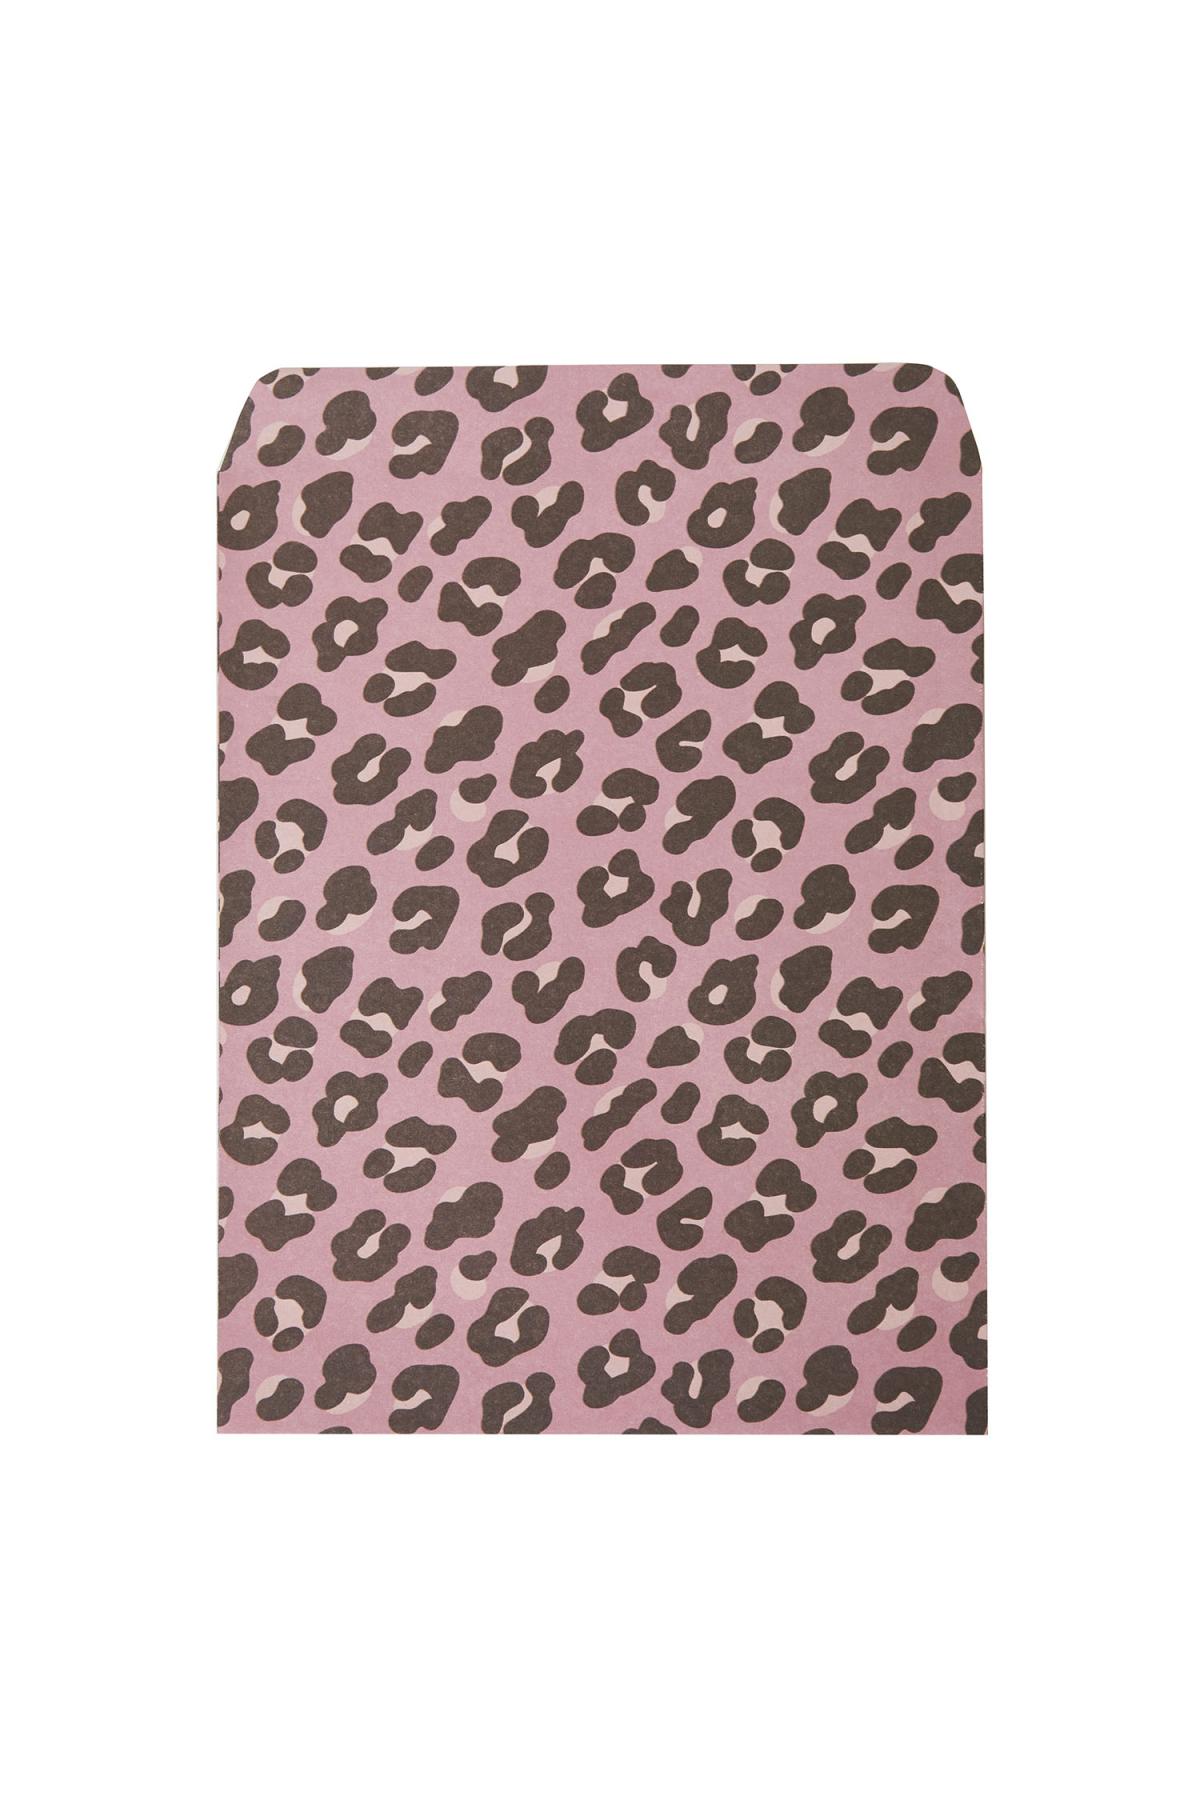 Borsa regalo leopardo rosa grande Pink Paper